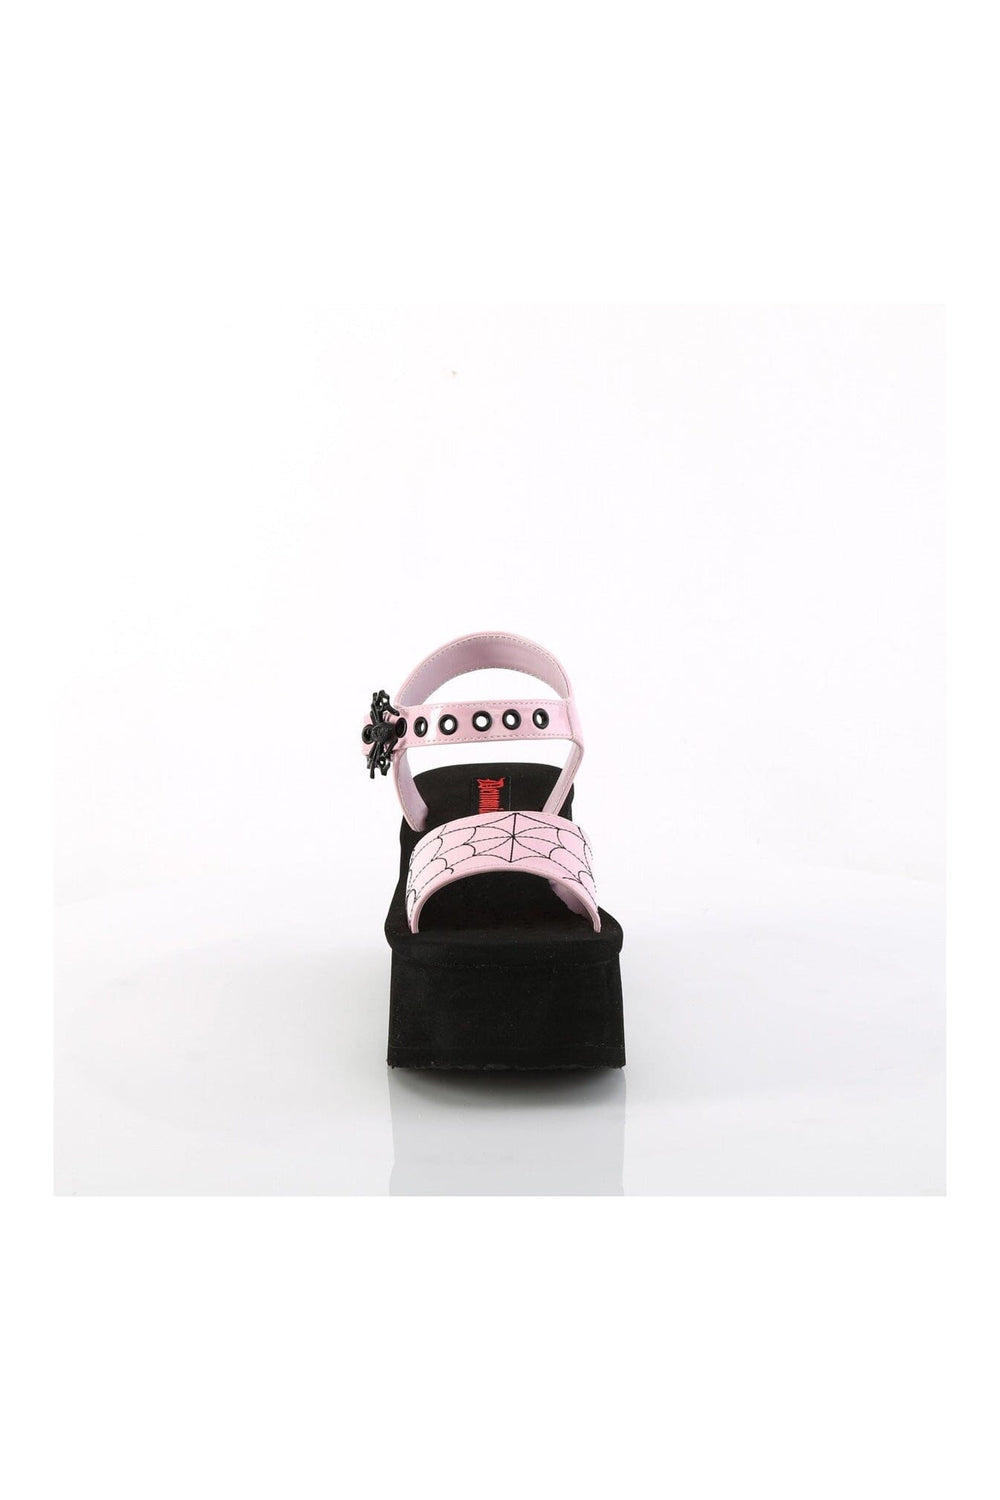 FUNN-10 Pink Hologram Patent Sandal-Sandals-Demonia-SEXYSHOES.COM